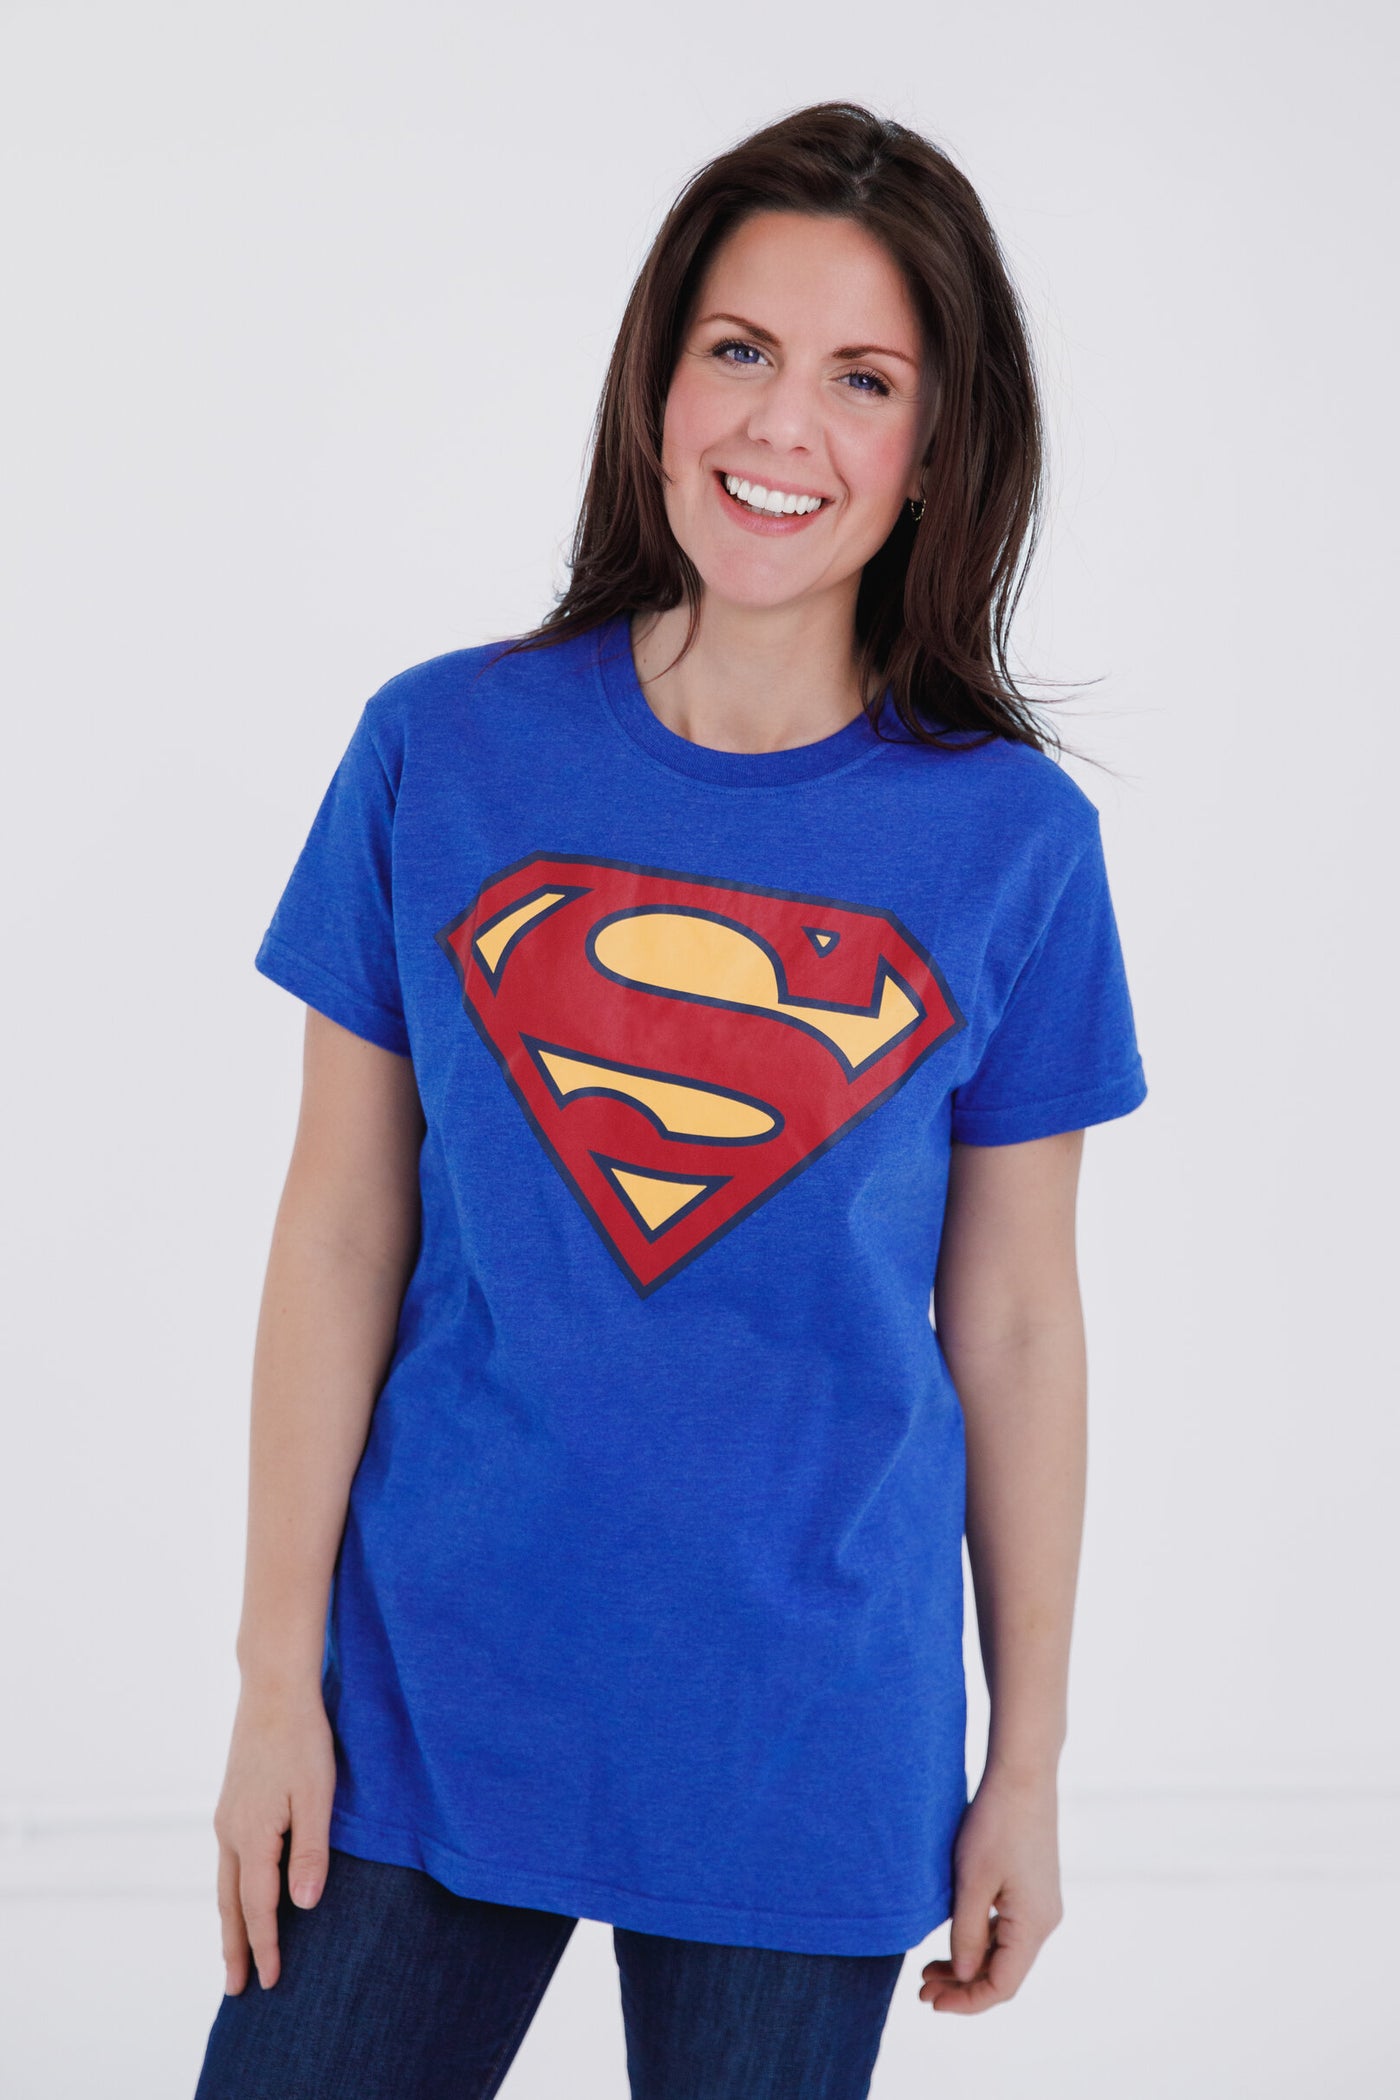 DC Comics Justice League Superman T-Shirt